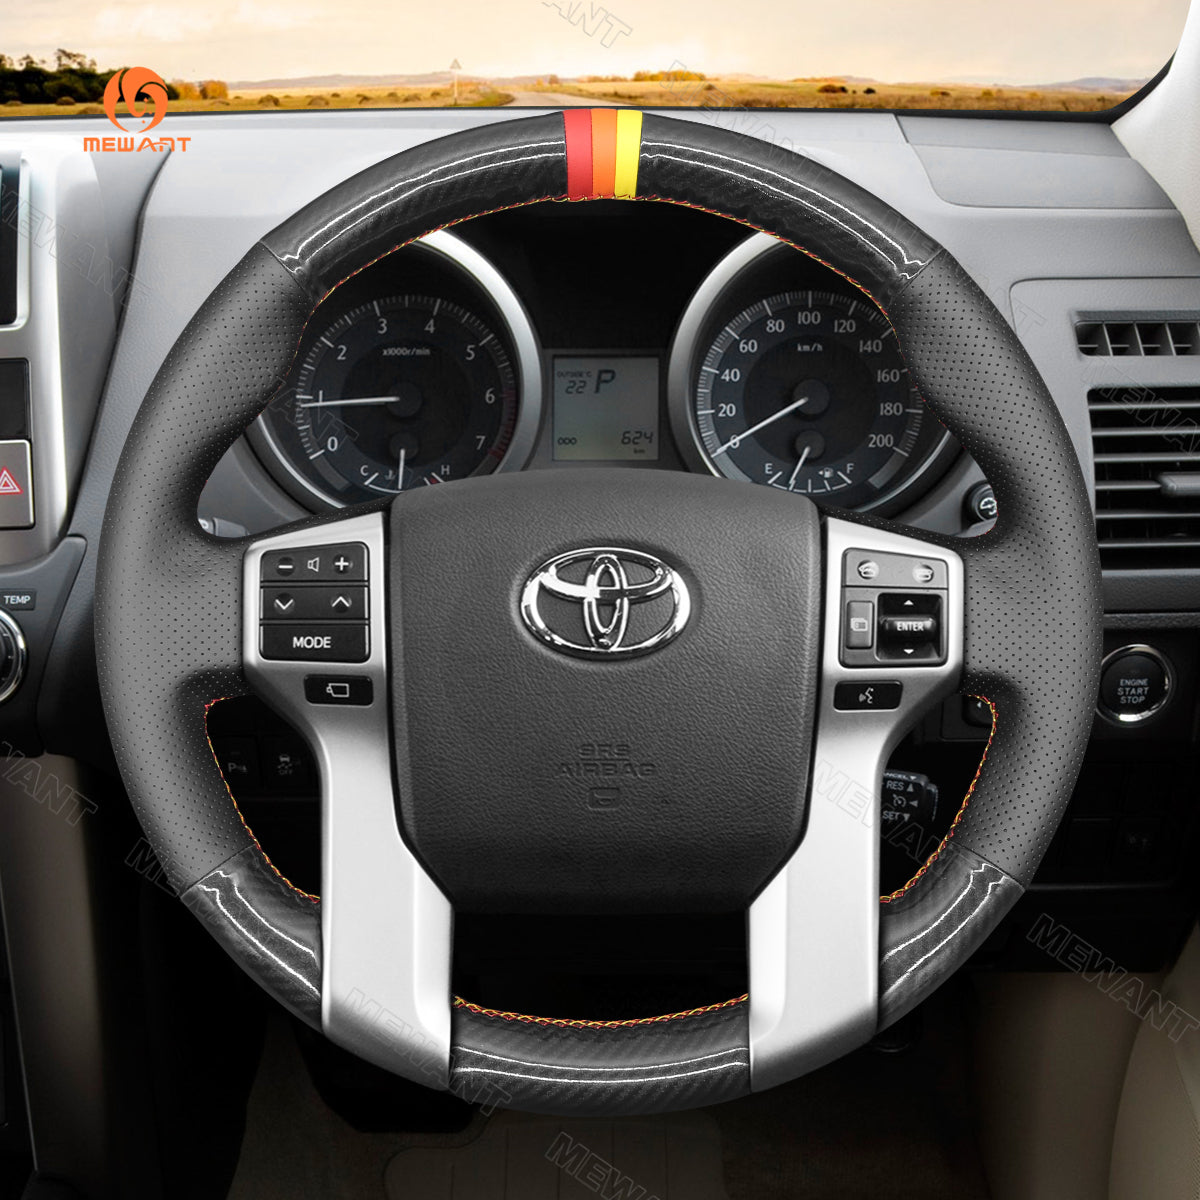 MEWANT Hand Stitch Black Carbon Fiber Leather Car Steering Wheel Cover for Toyota Land Cruiser Prado 2009-2017 / Tundra 2013-2020